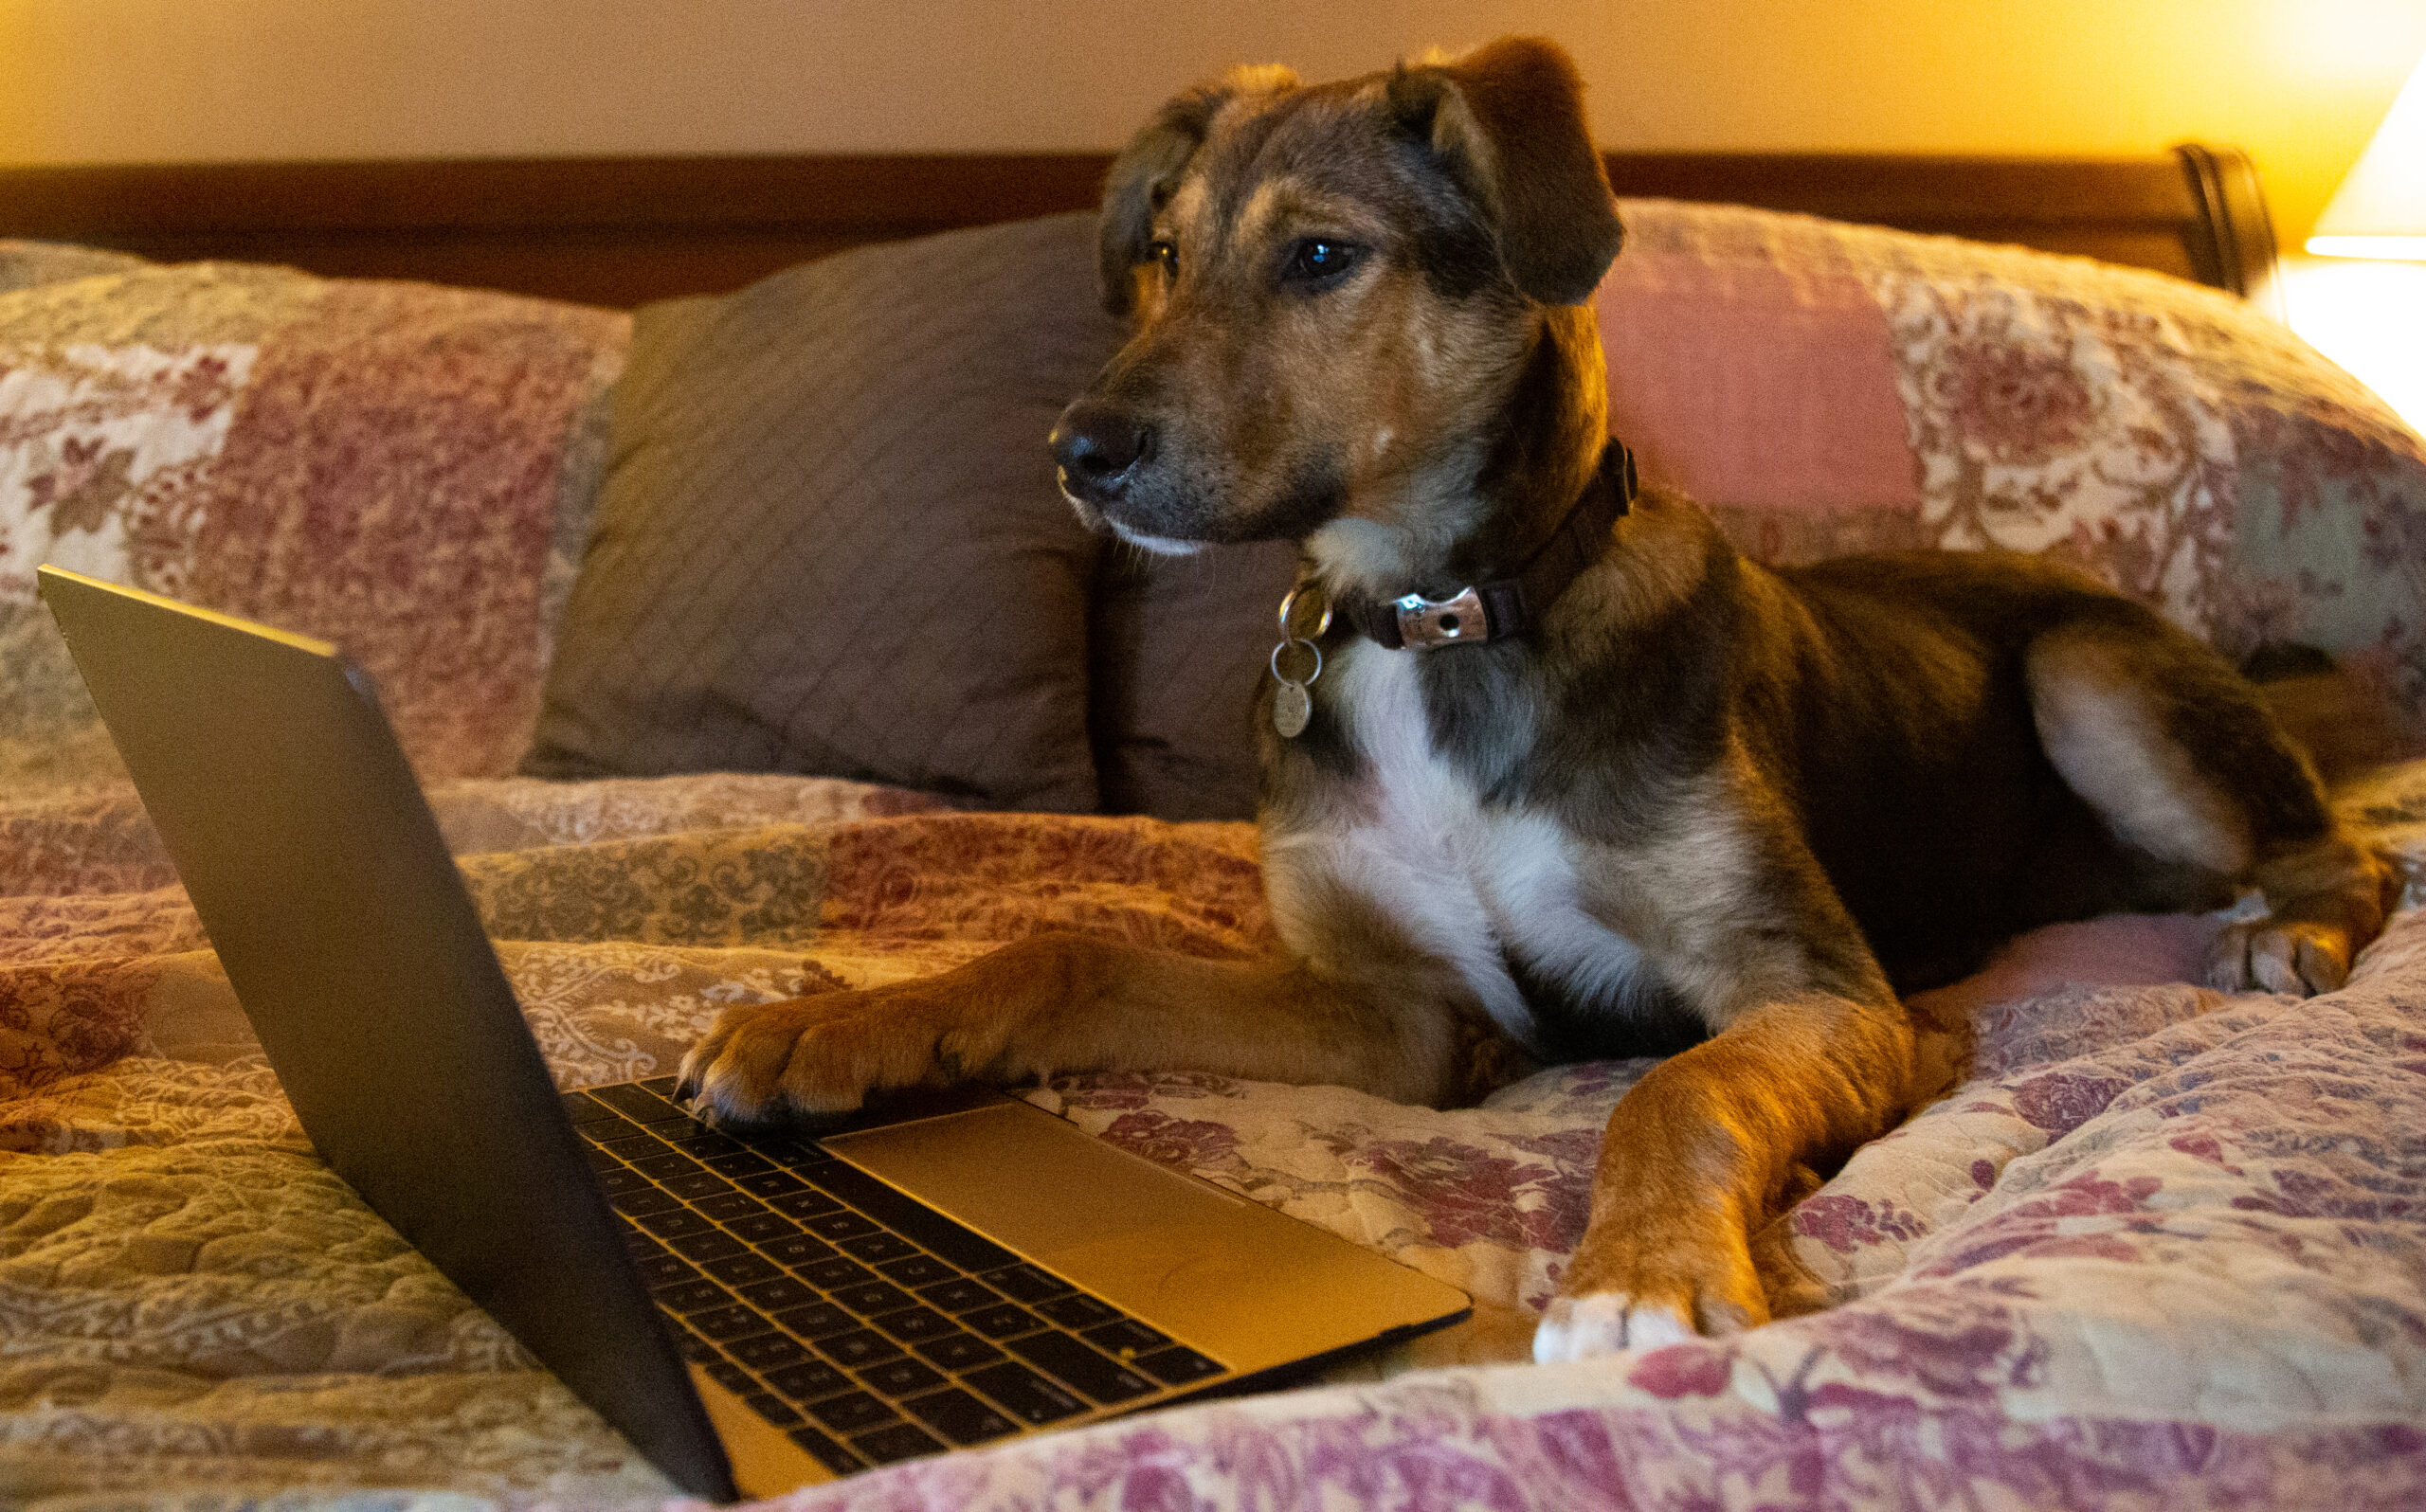 A dog looking at a computer screen.